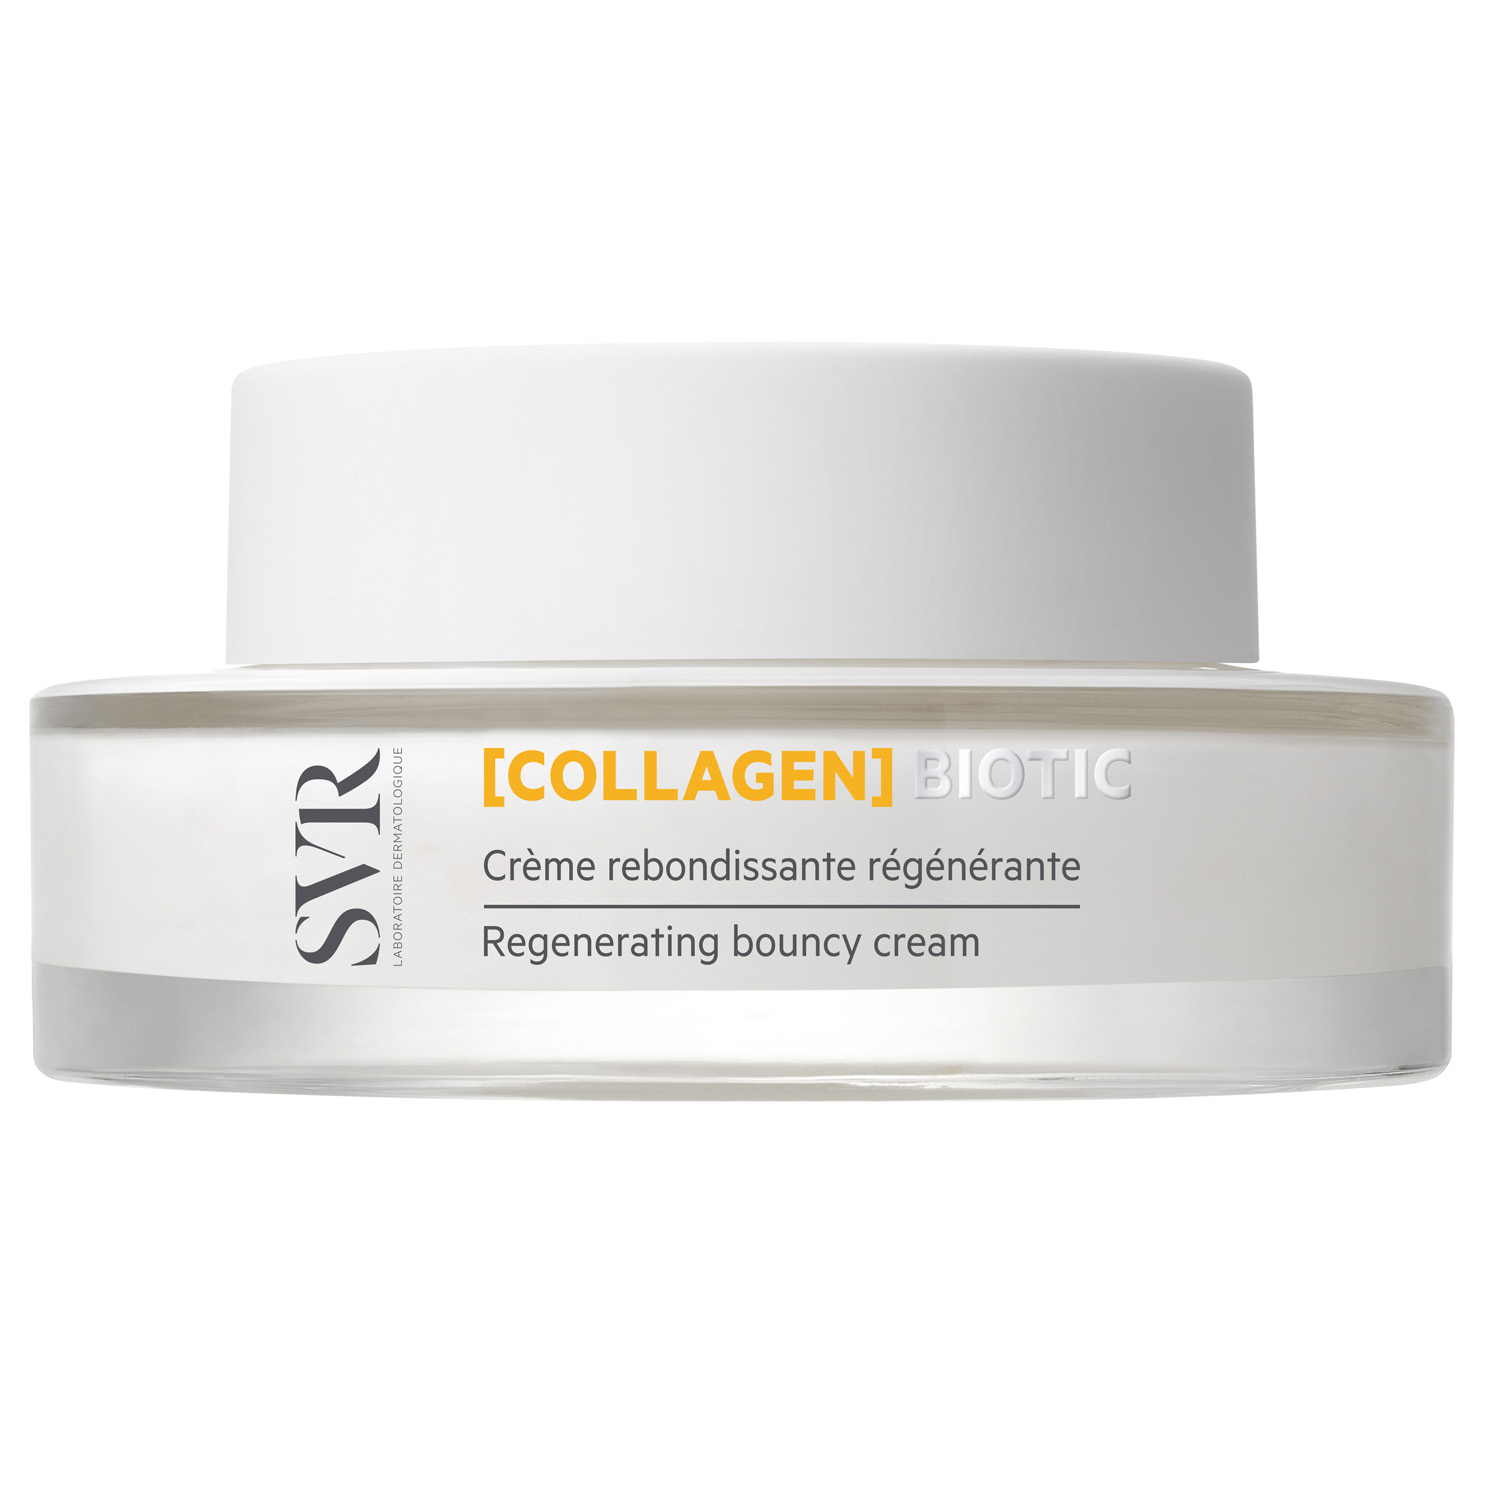 SVR Восстанавливающий крем [Collagen], 50 мл (SVR, Biotic)